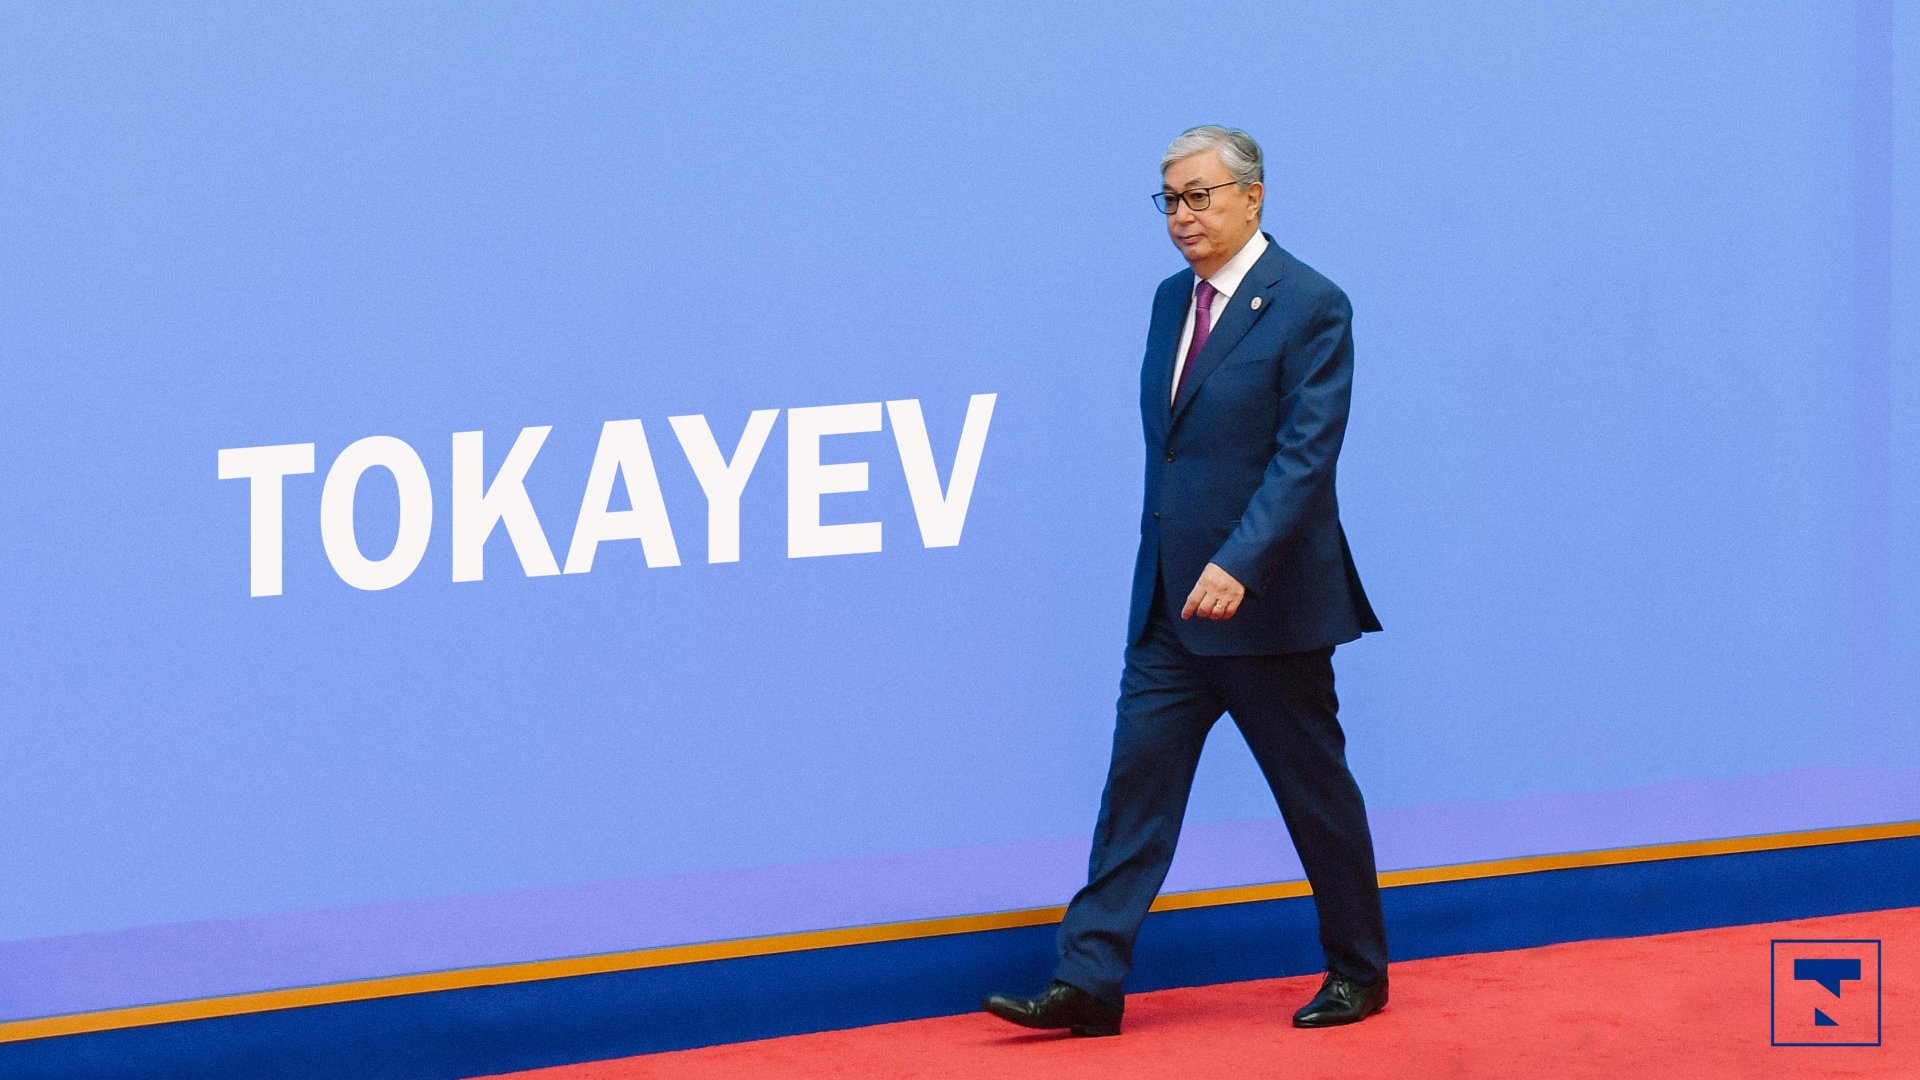 Anadolu Ajansı: "Тоқаев саяси реформасыз экономикалық даму жоғын түсінді"